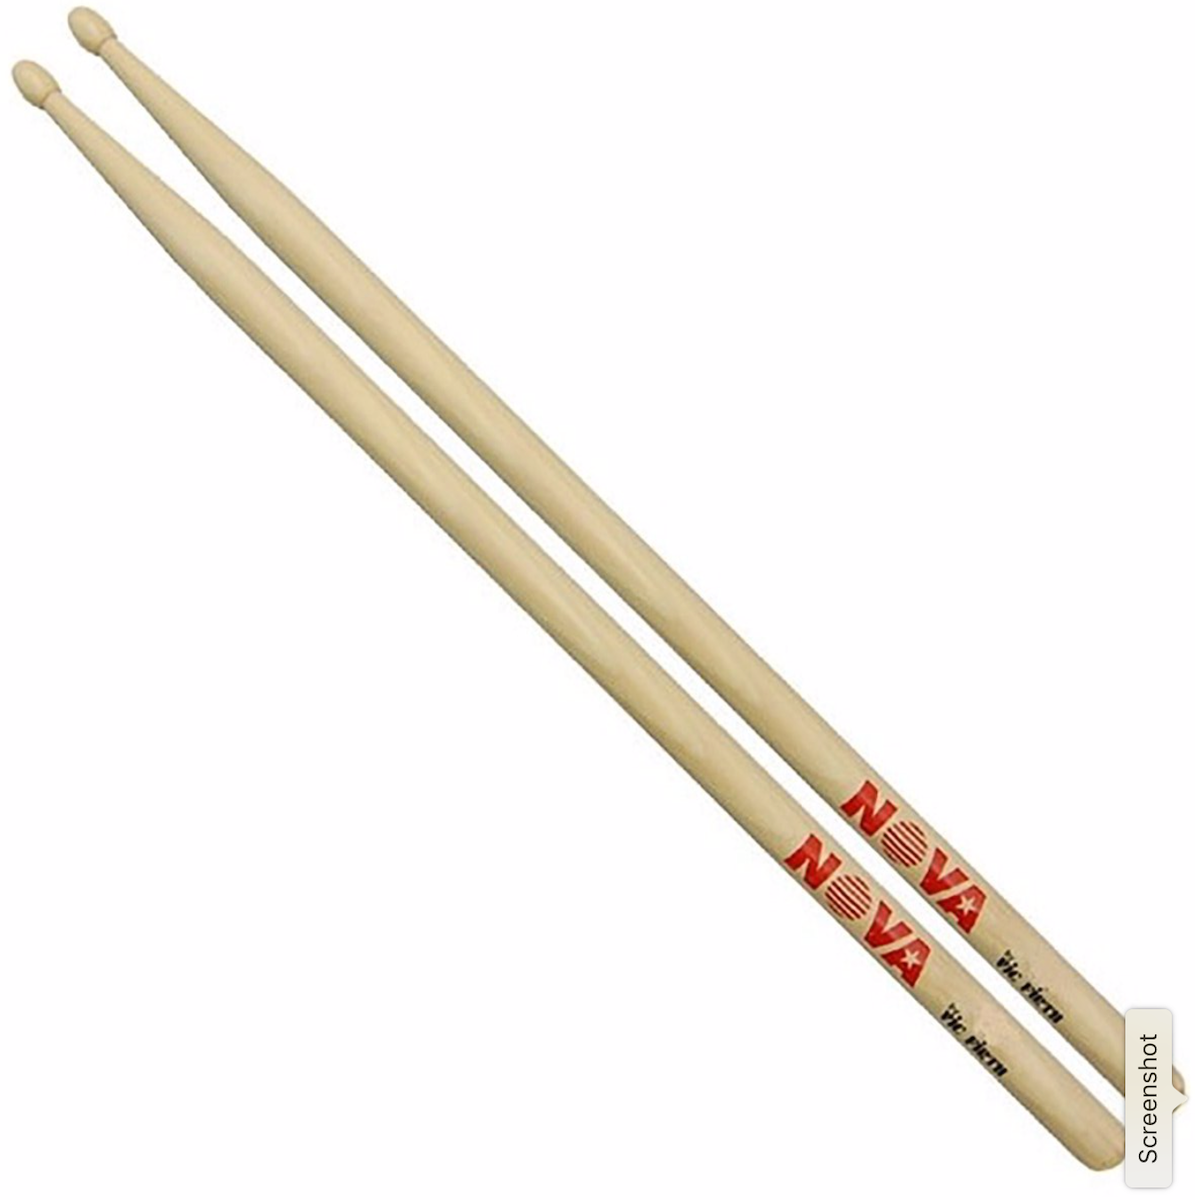 Vic Firth Nova 5A wooden tipped drumsticks